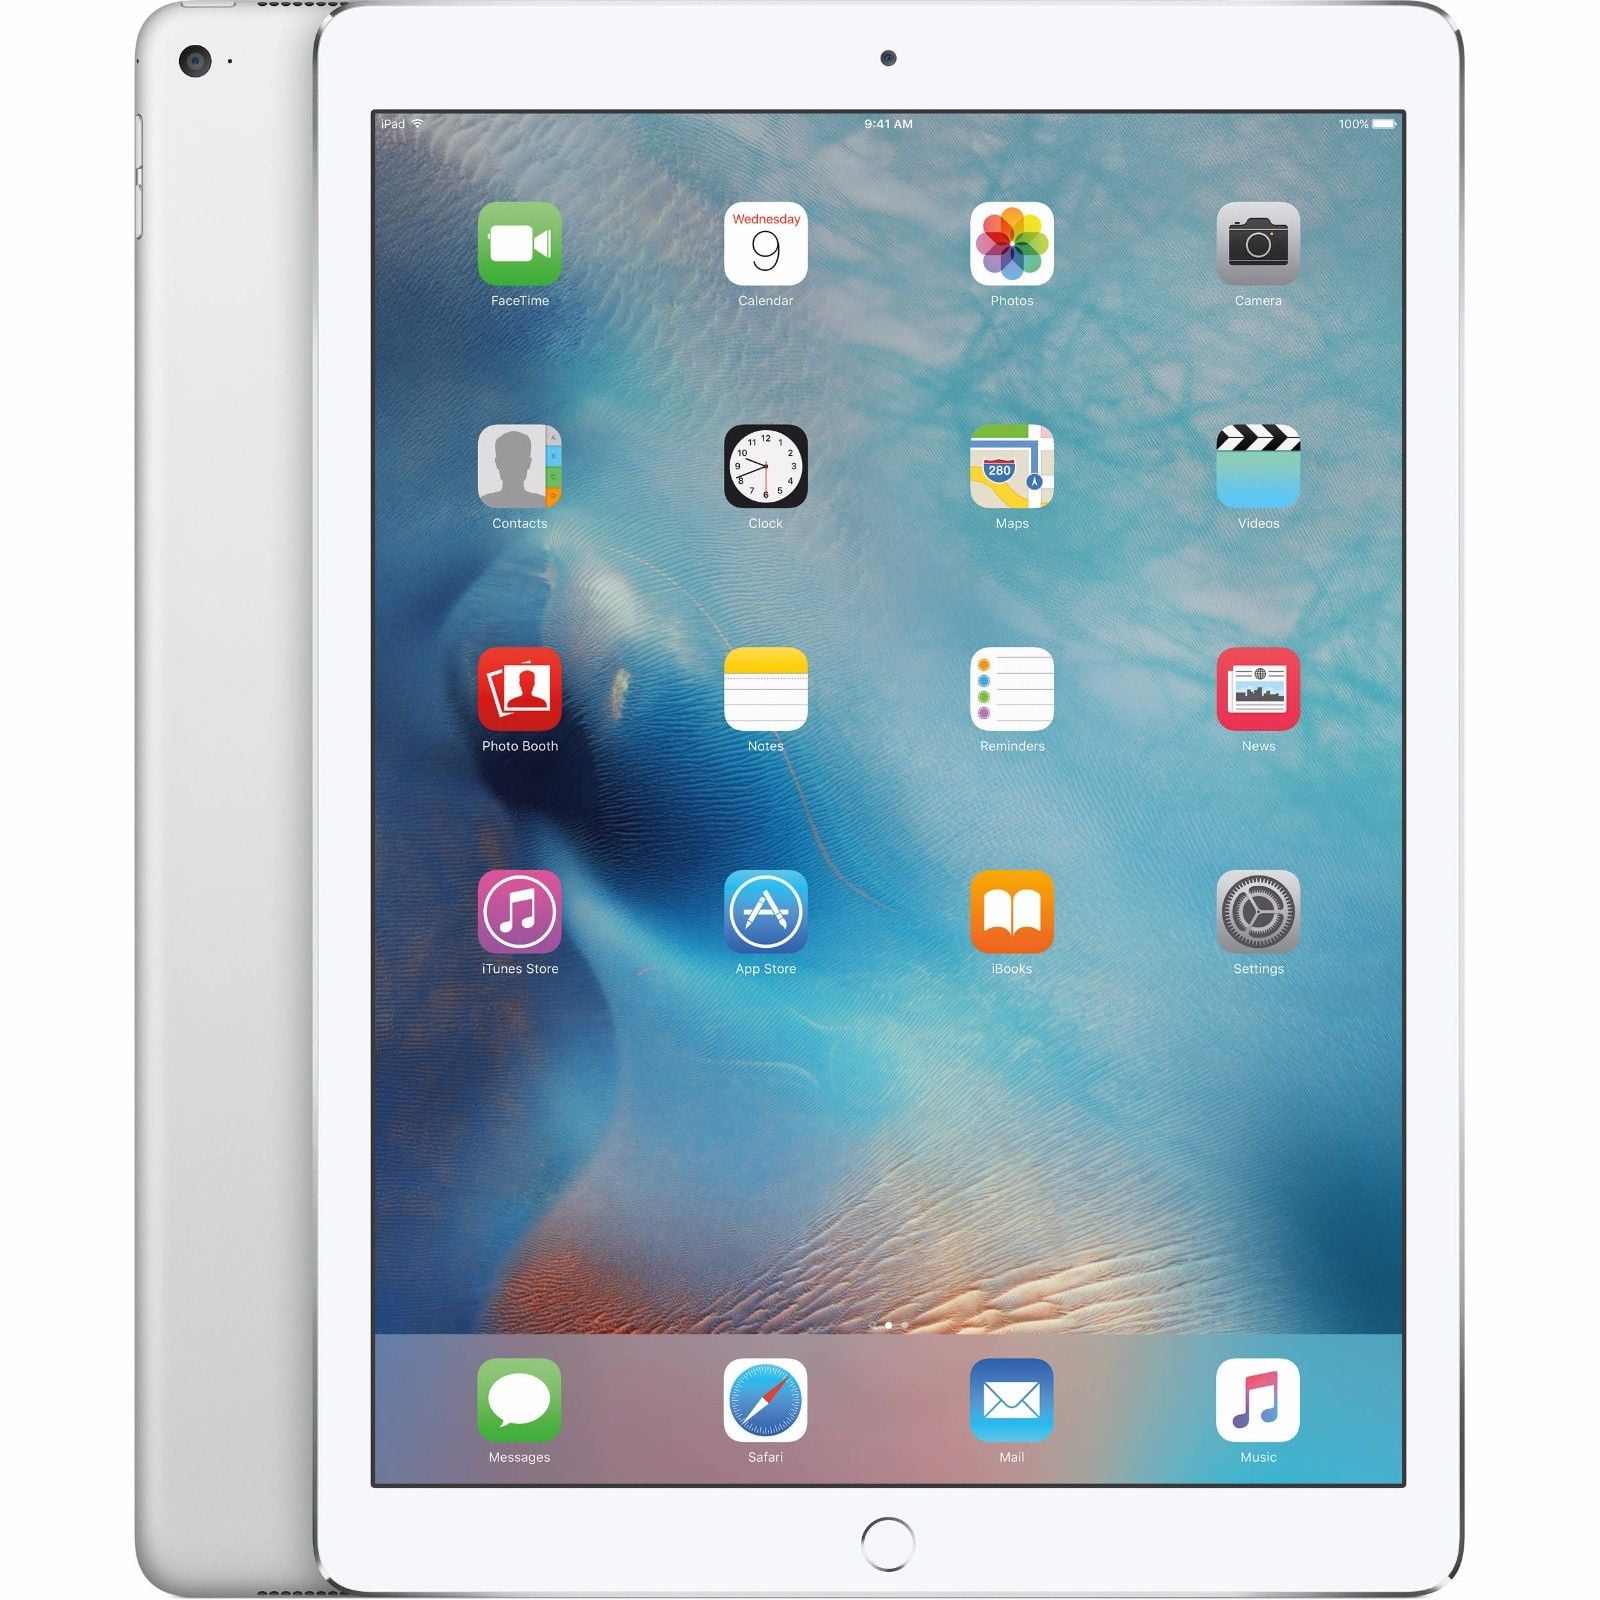 iPad reacondicionado - Apple iPad-2 16Gb (Wi-Fi) Blanco 9.7